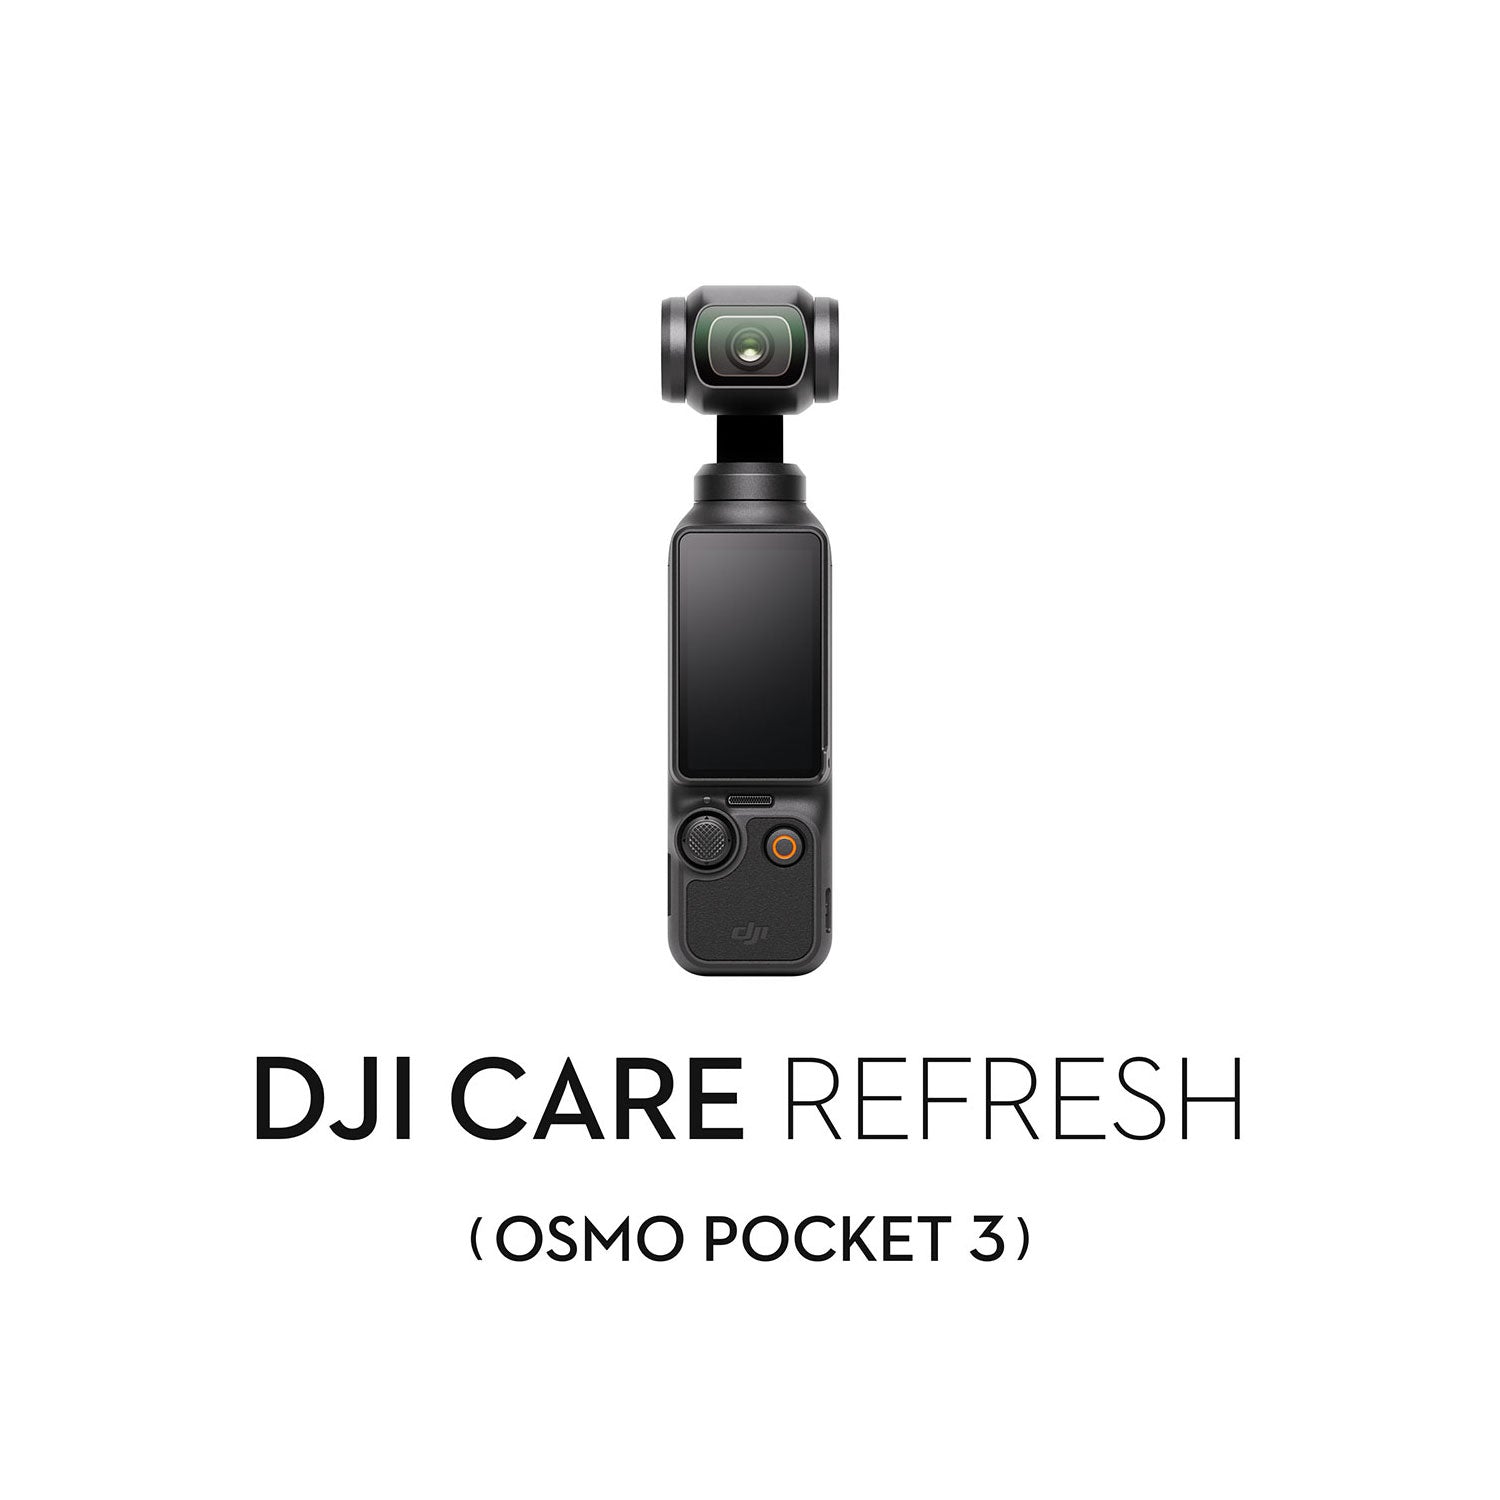 DJI Care Refresh 2年版(Osmo Pocket 3) - 業務用撮影・映像・音響